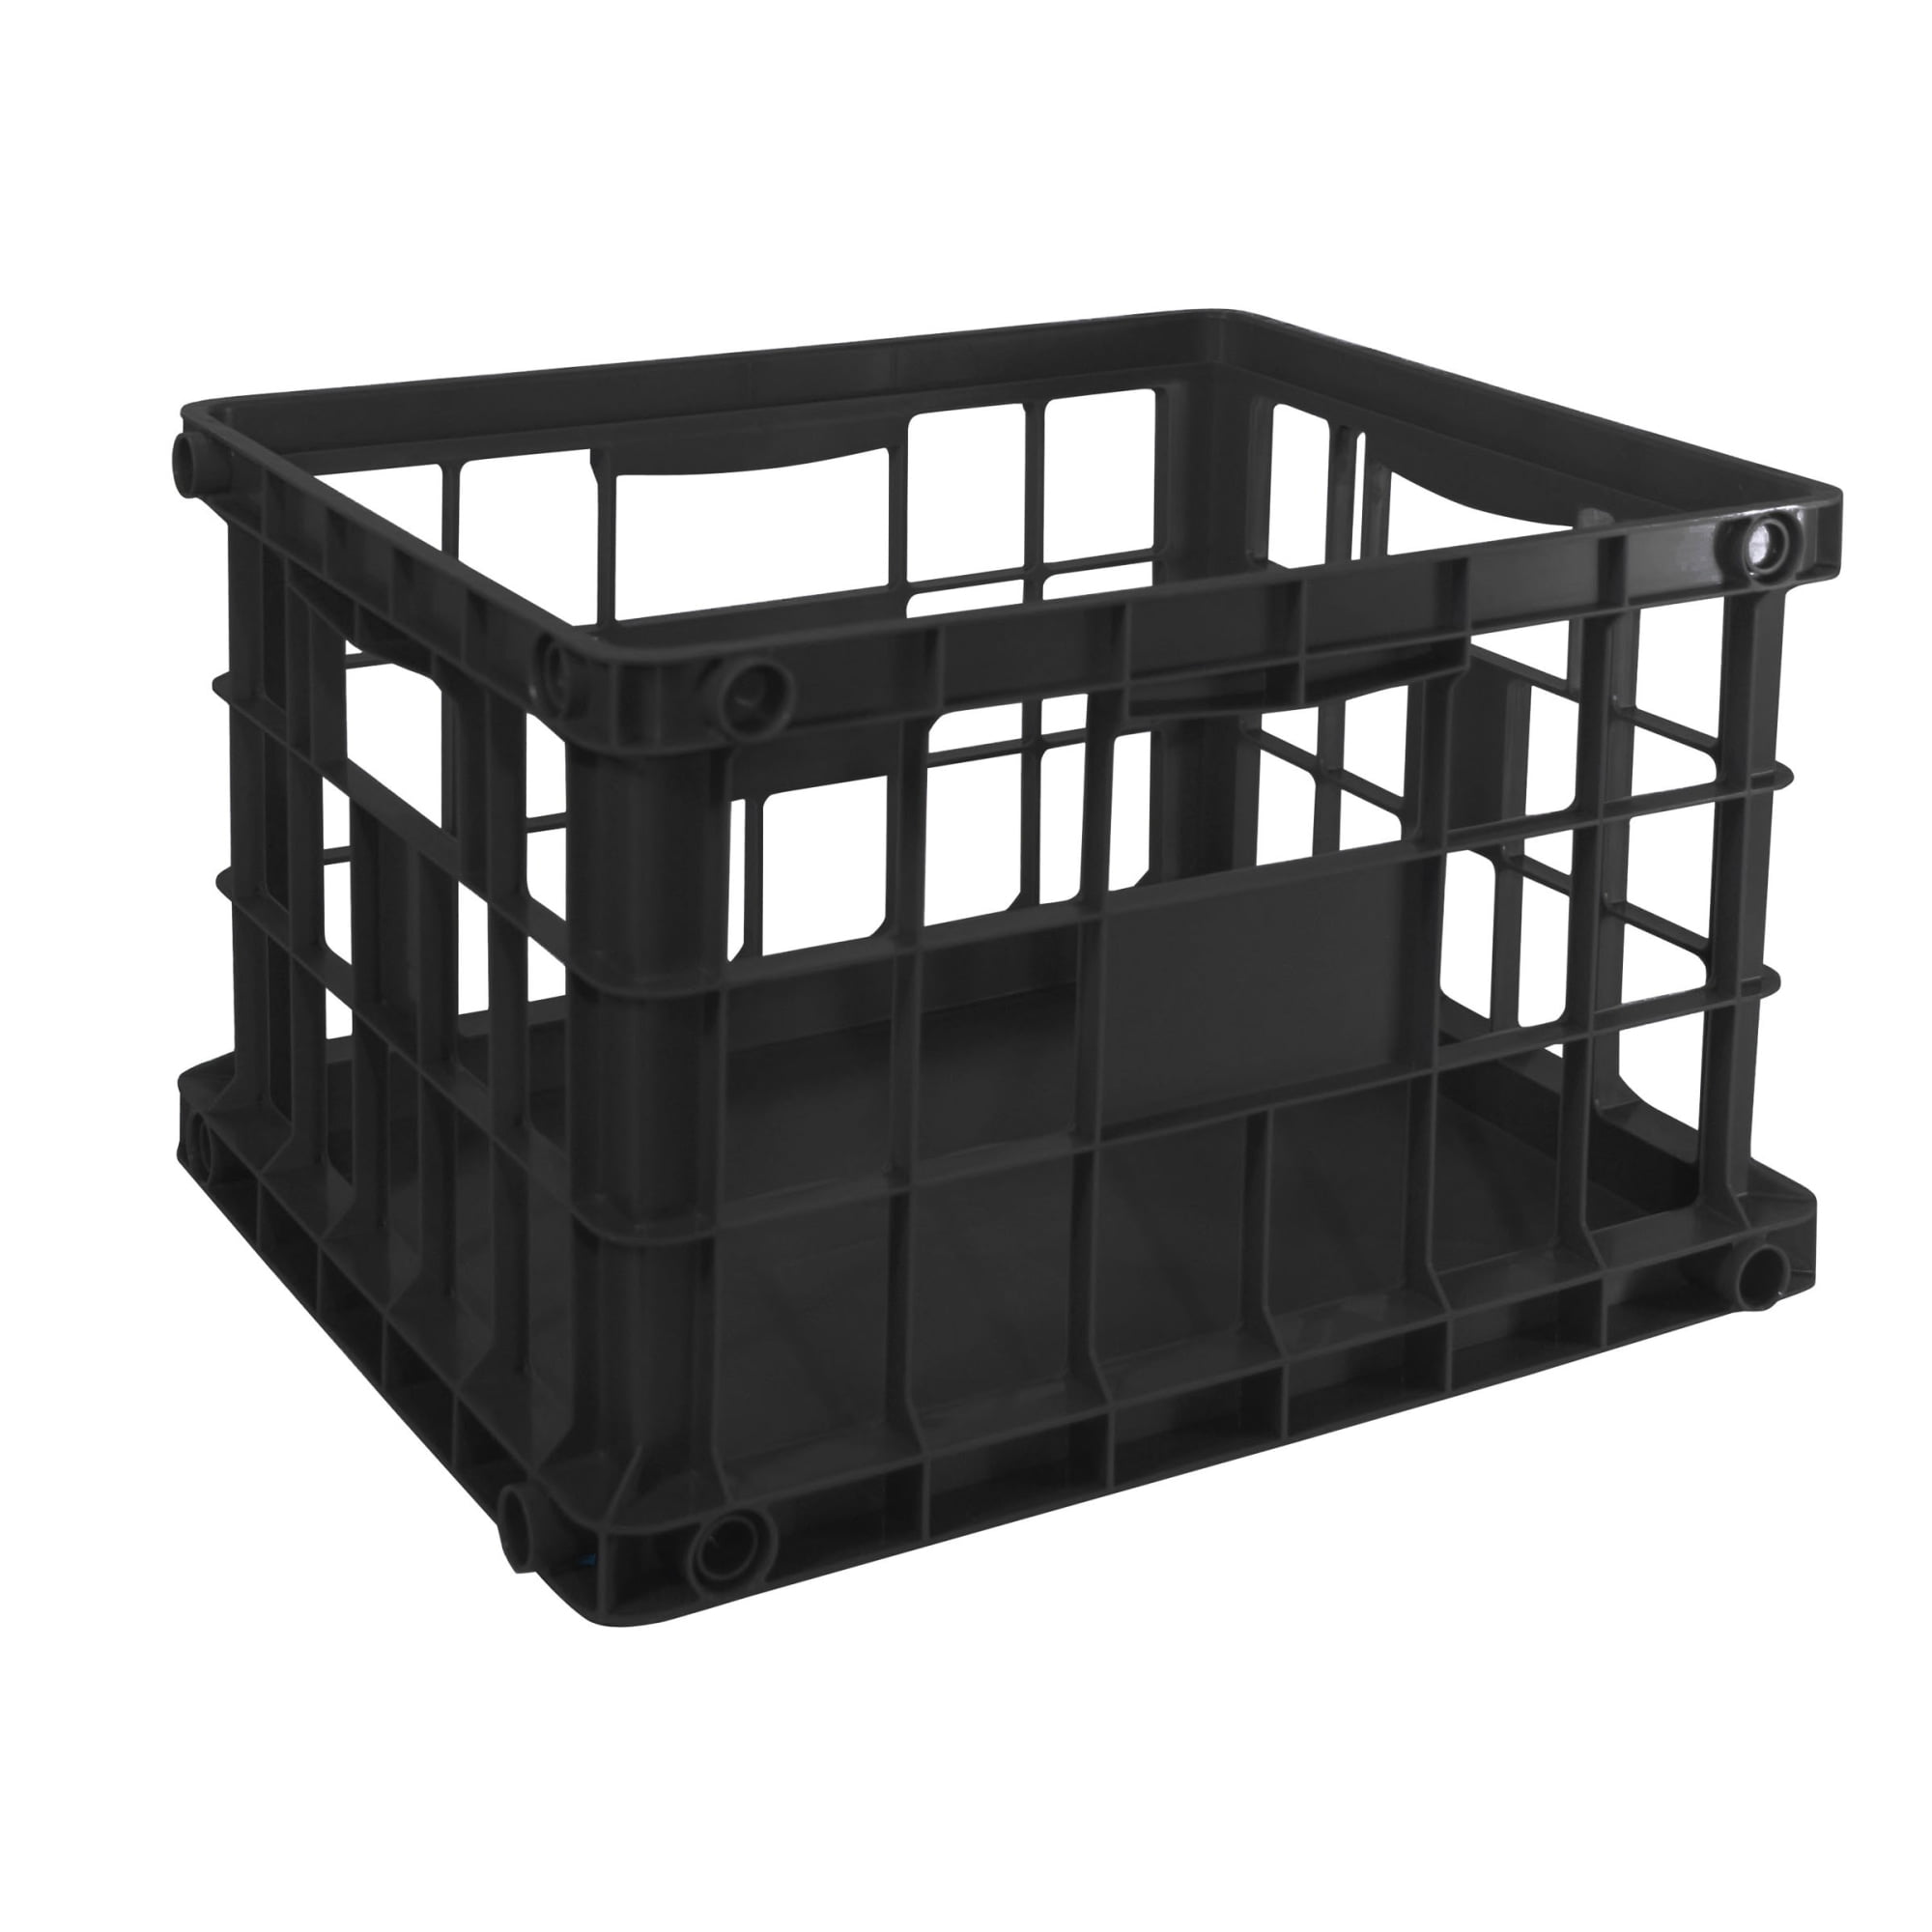 1 Crate Black 27570 Pack 2 Pendaflex File Crate 